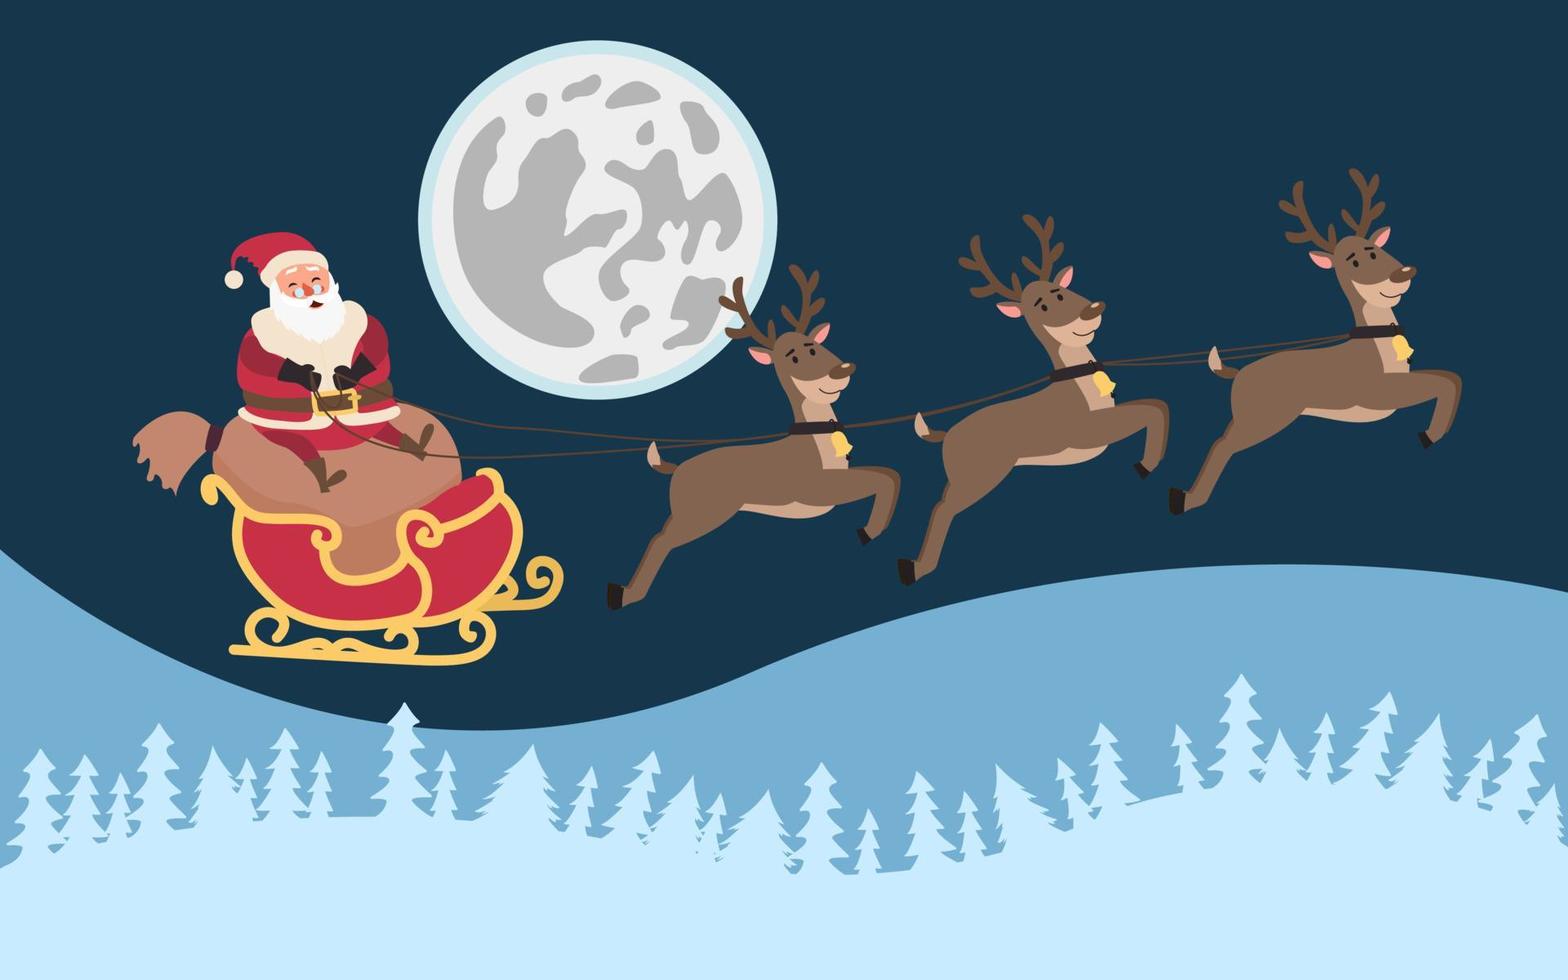 Santa On A Sleigh With Reindeer Flies Across The Sky Against The Background Of The Moon. vector